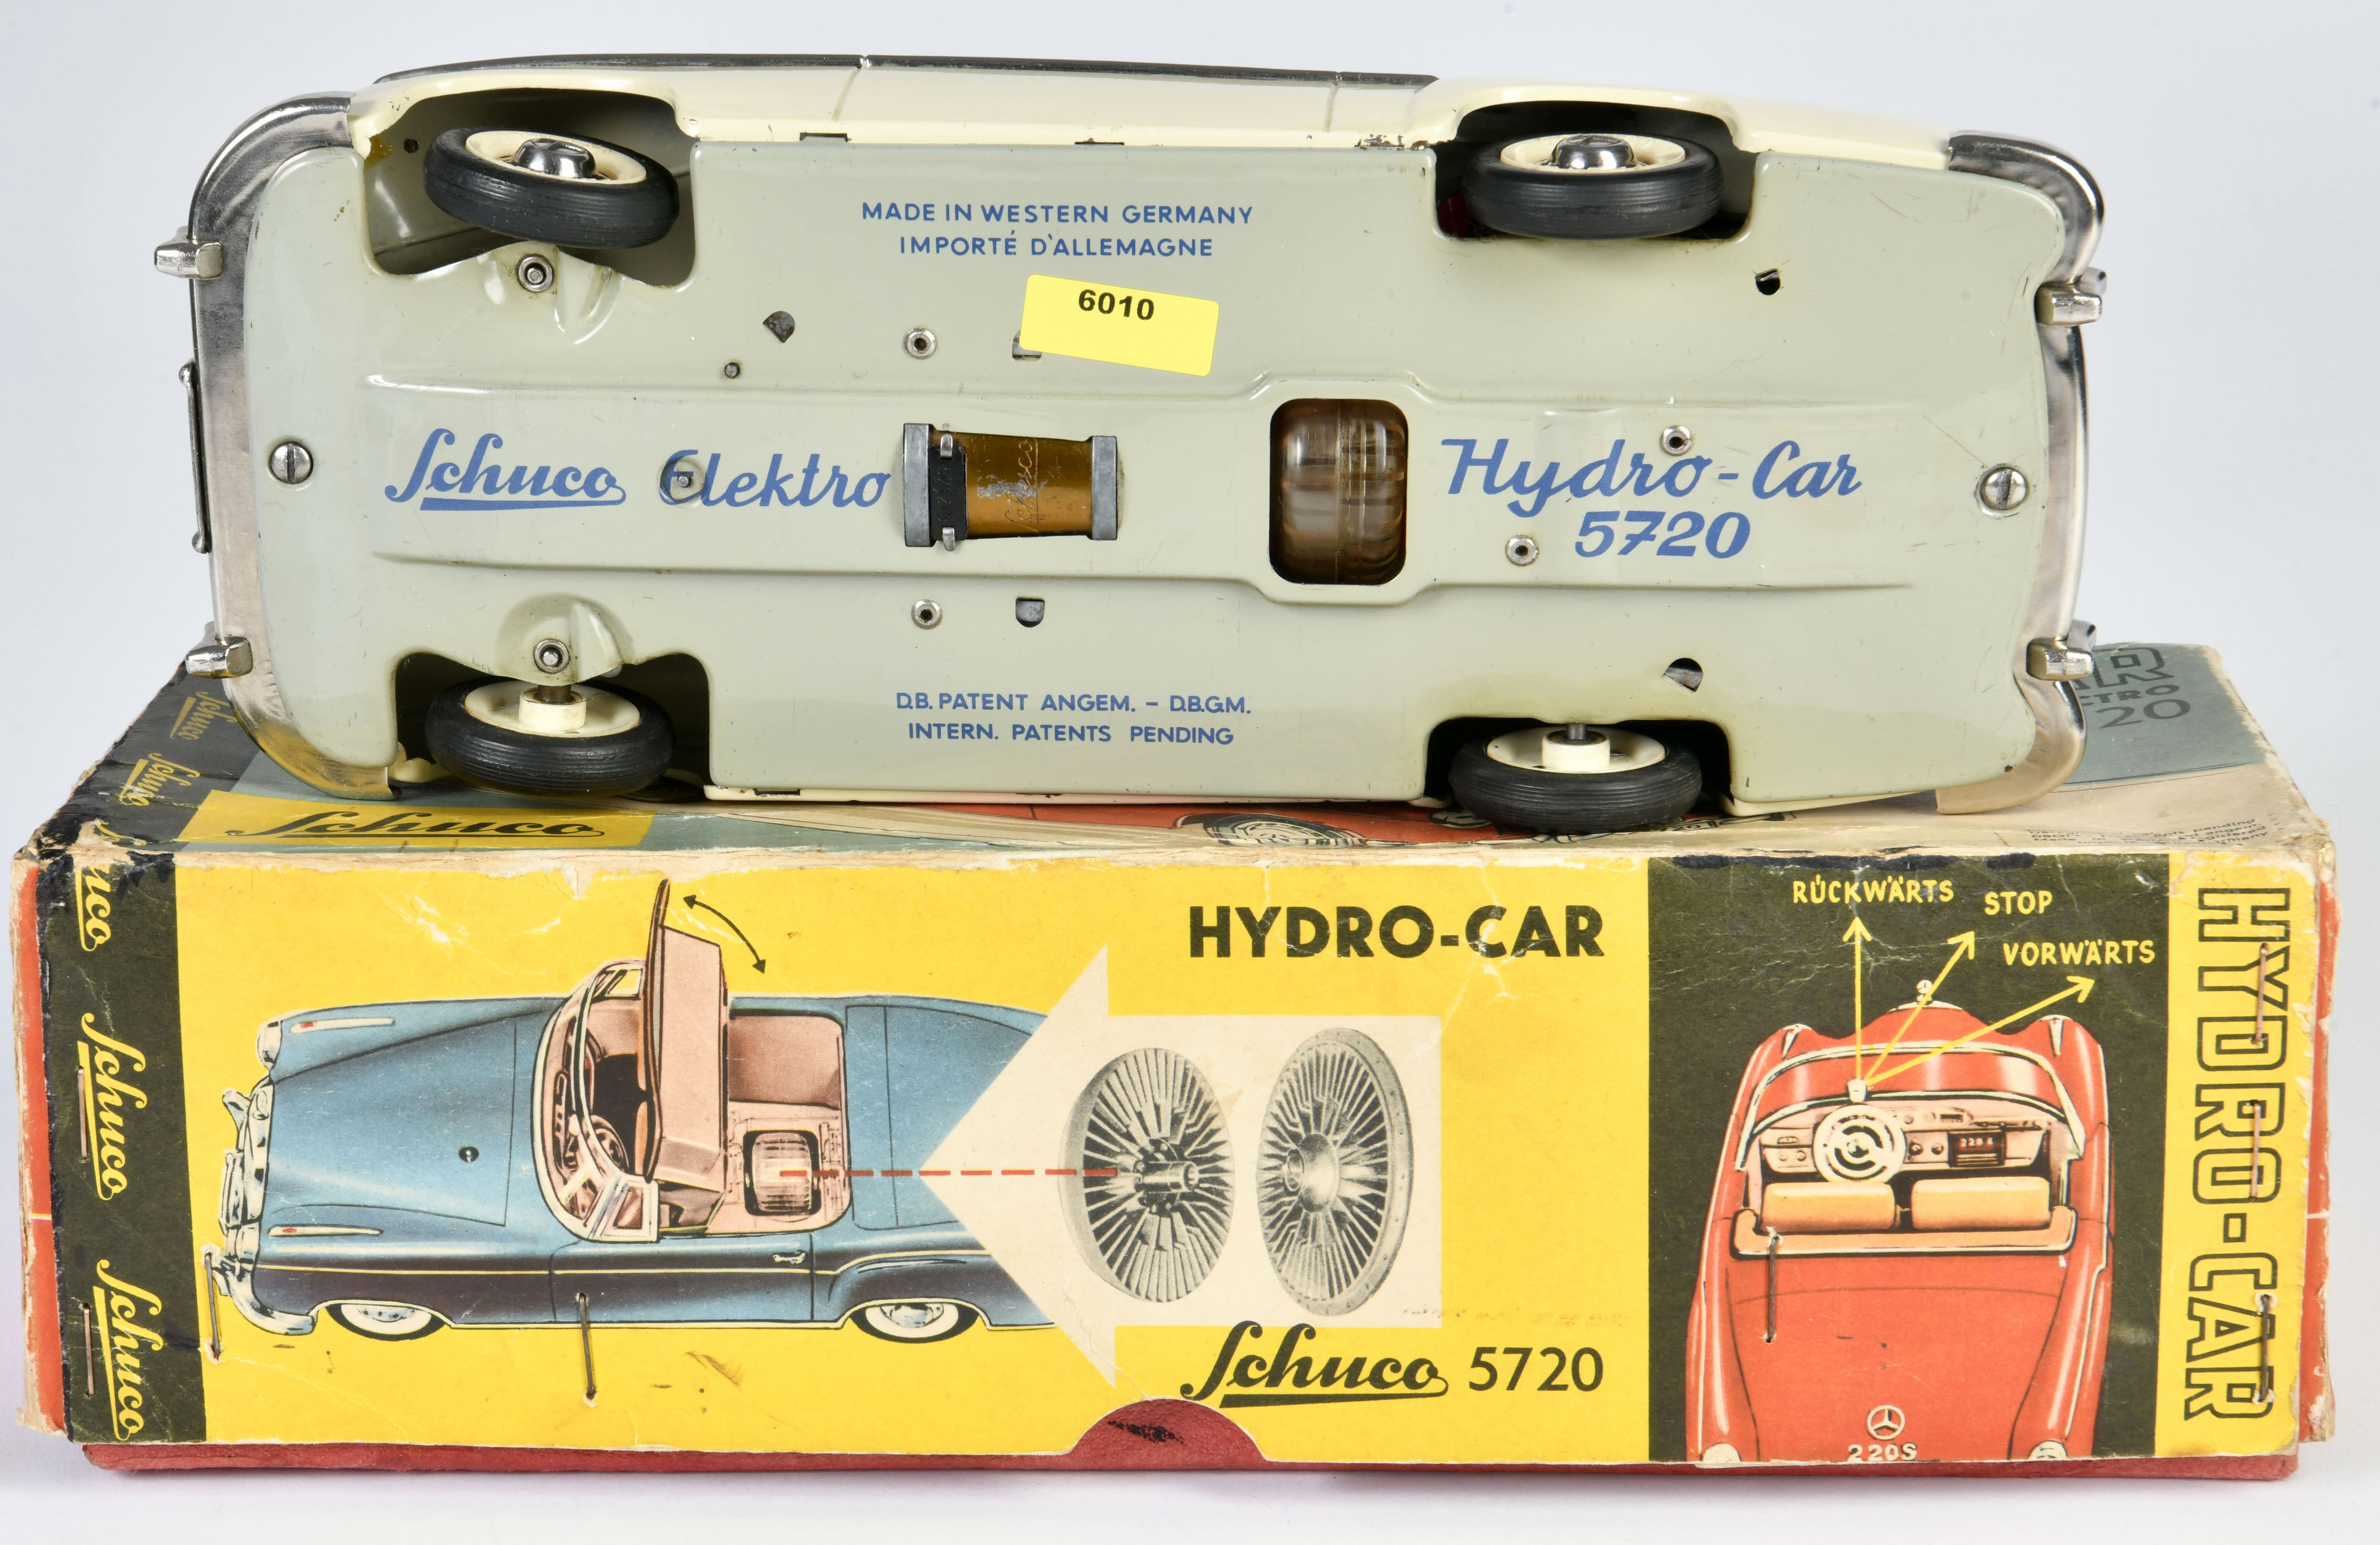 Schuco, Hydro Car, W.-Germany, 25 cm, tin, box C 2, min. paint d., emblem damaged, otherwise C 2+ - Image 3 of 3